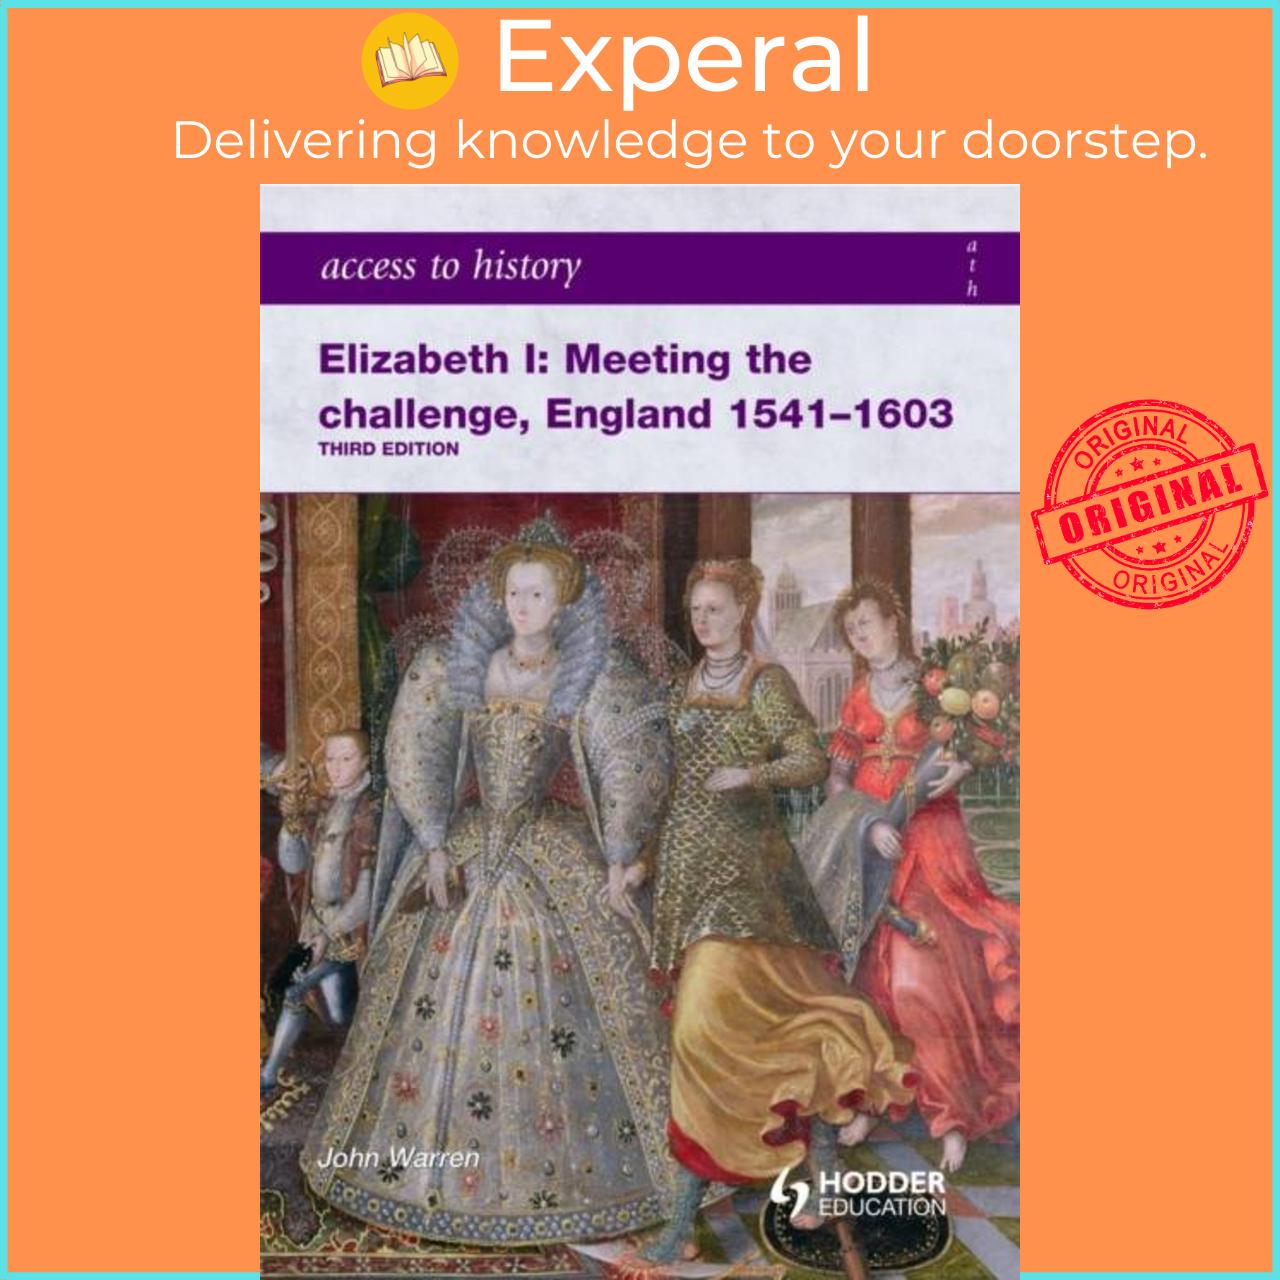 Hình ảnh Sách - Access to History: Elizabeth I Meeting the Challenge:England 1541-1603 by John Warren (UK edition, paperback)